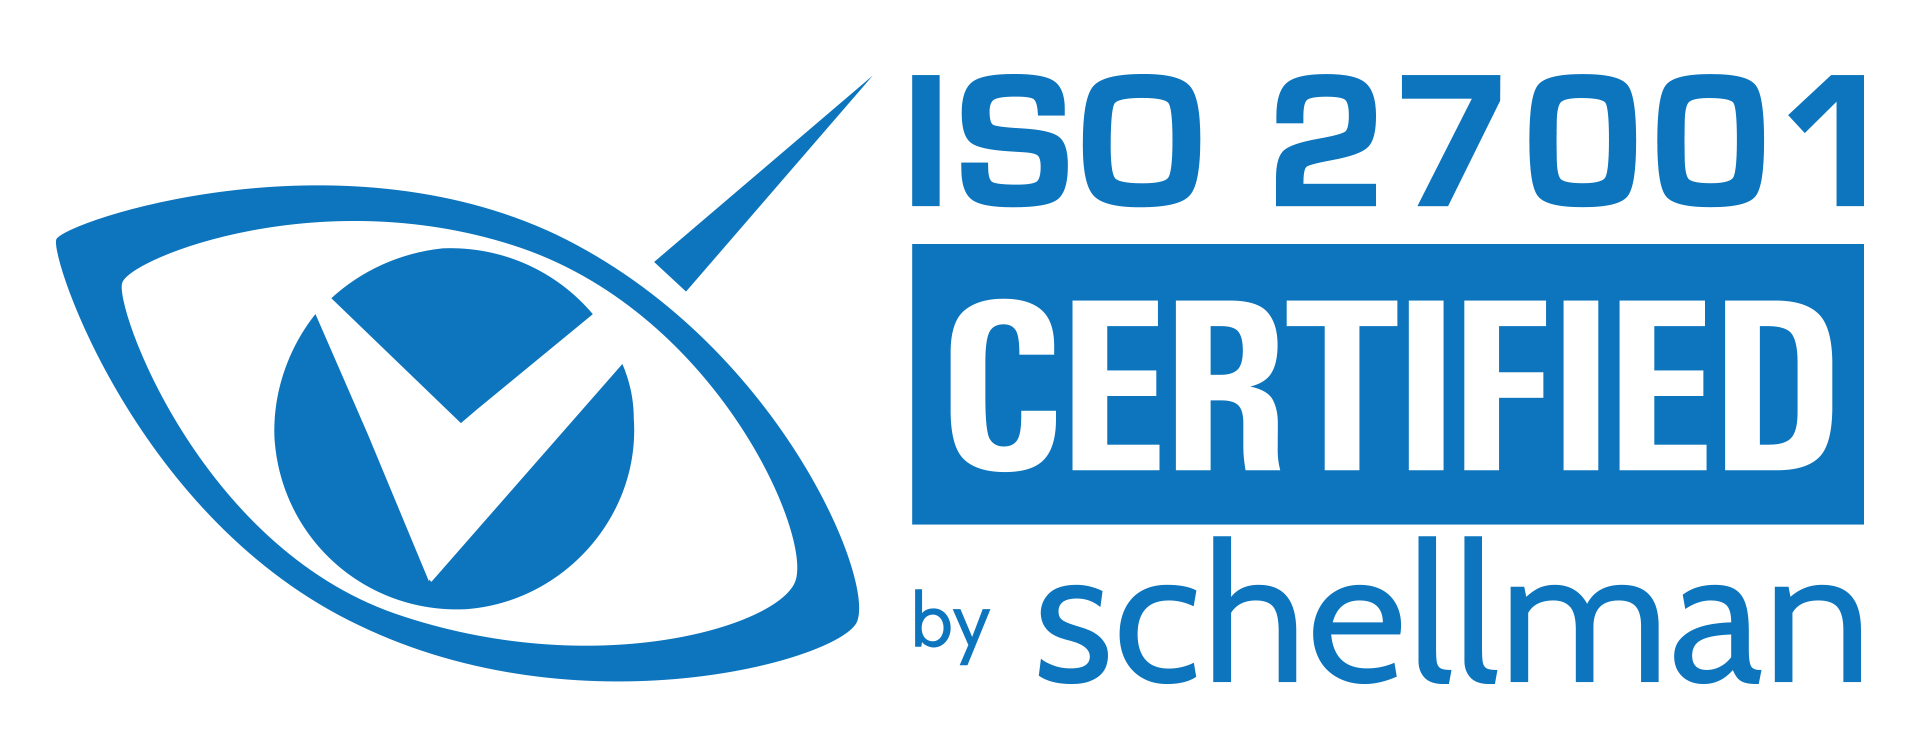 iso27001 logo